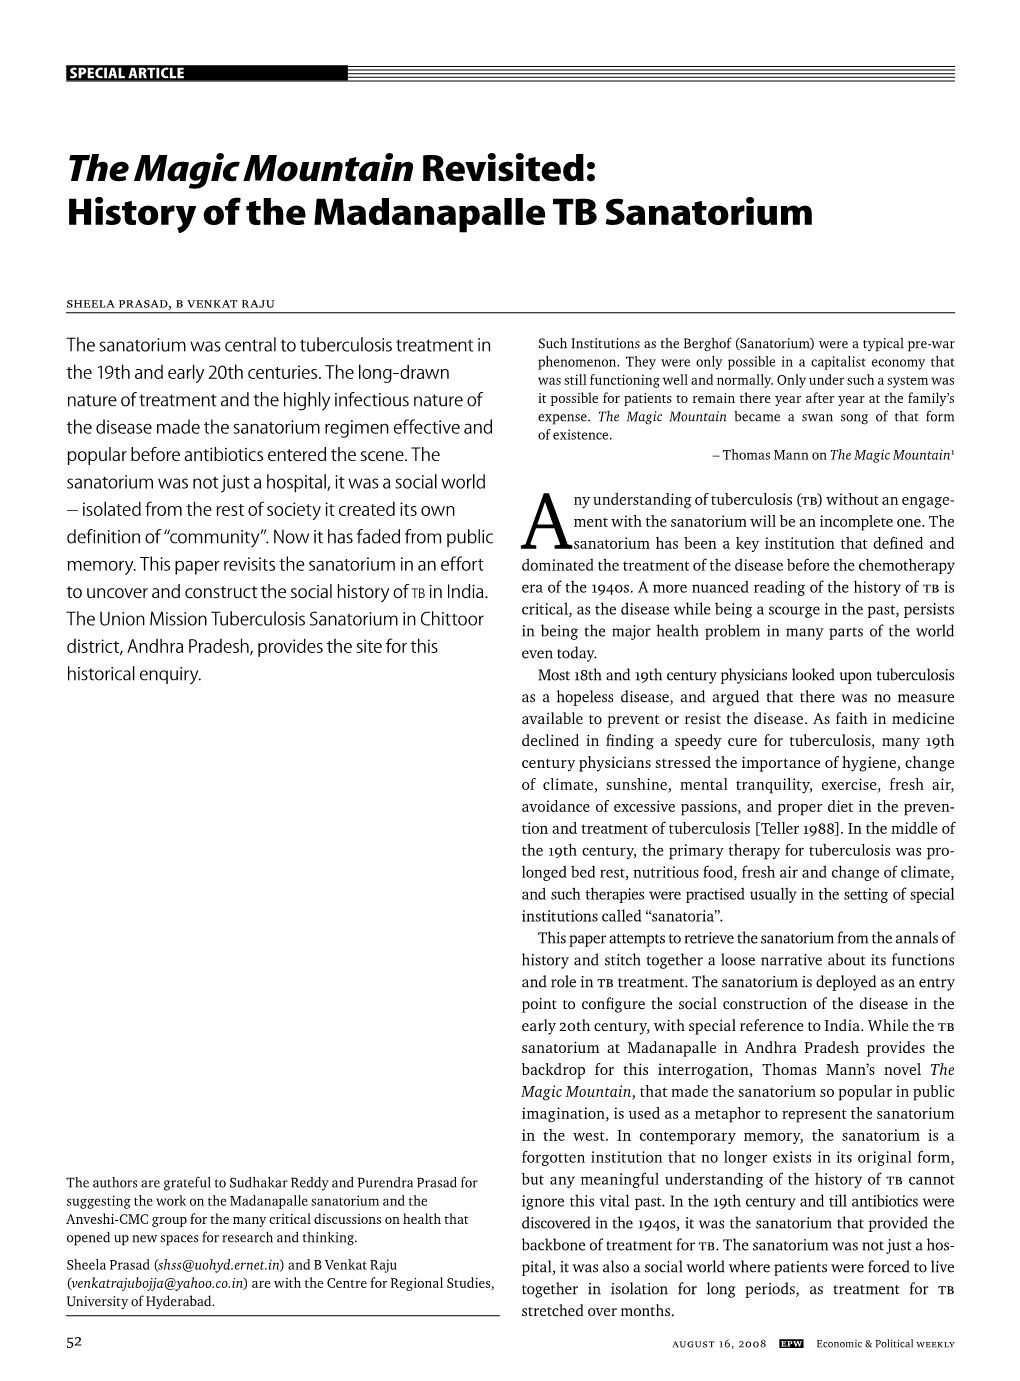 History of the Madanapalle TB Sanatorium